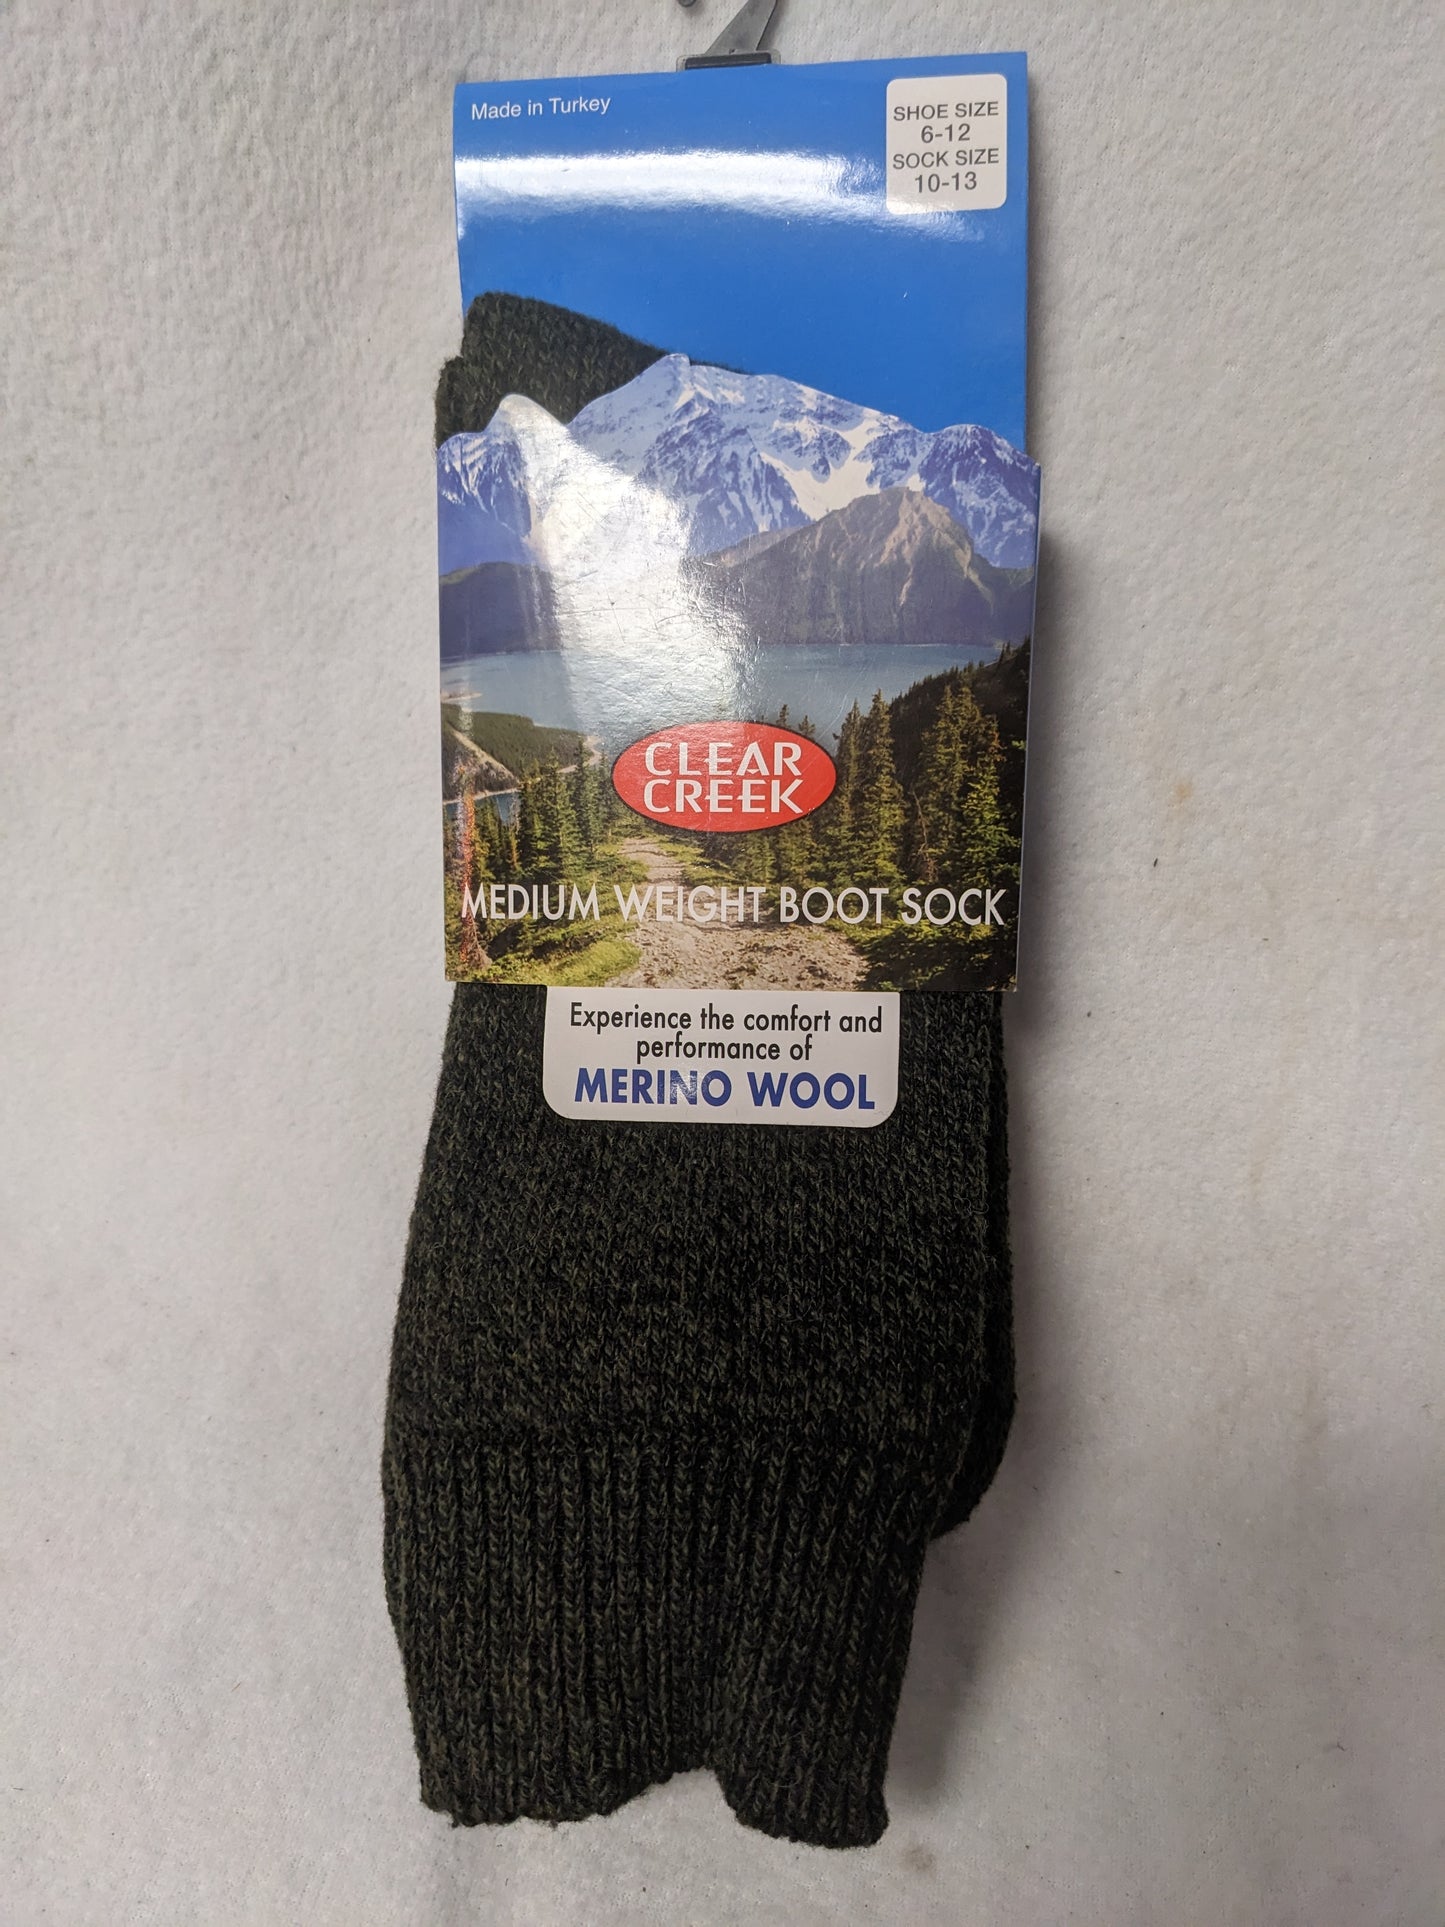 Clear Creek Merino Wool Medium Weight Boot Sock Shoe Size 6-12